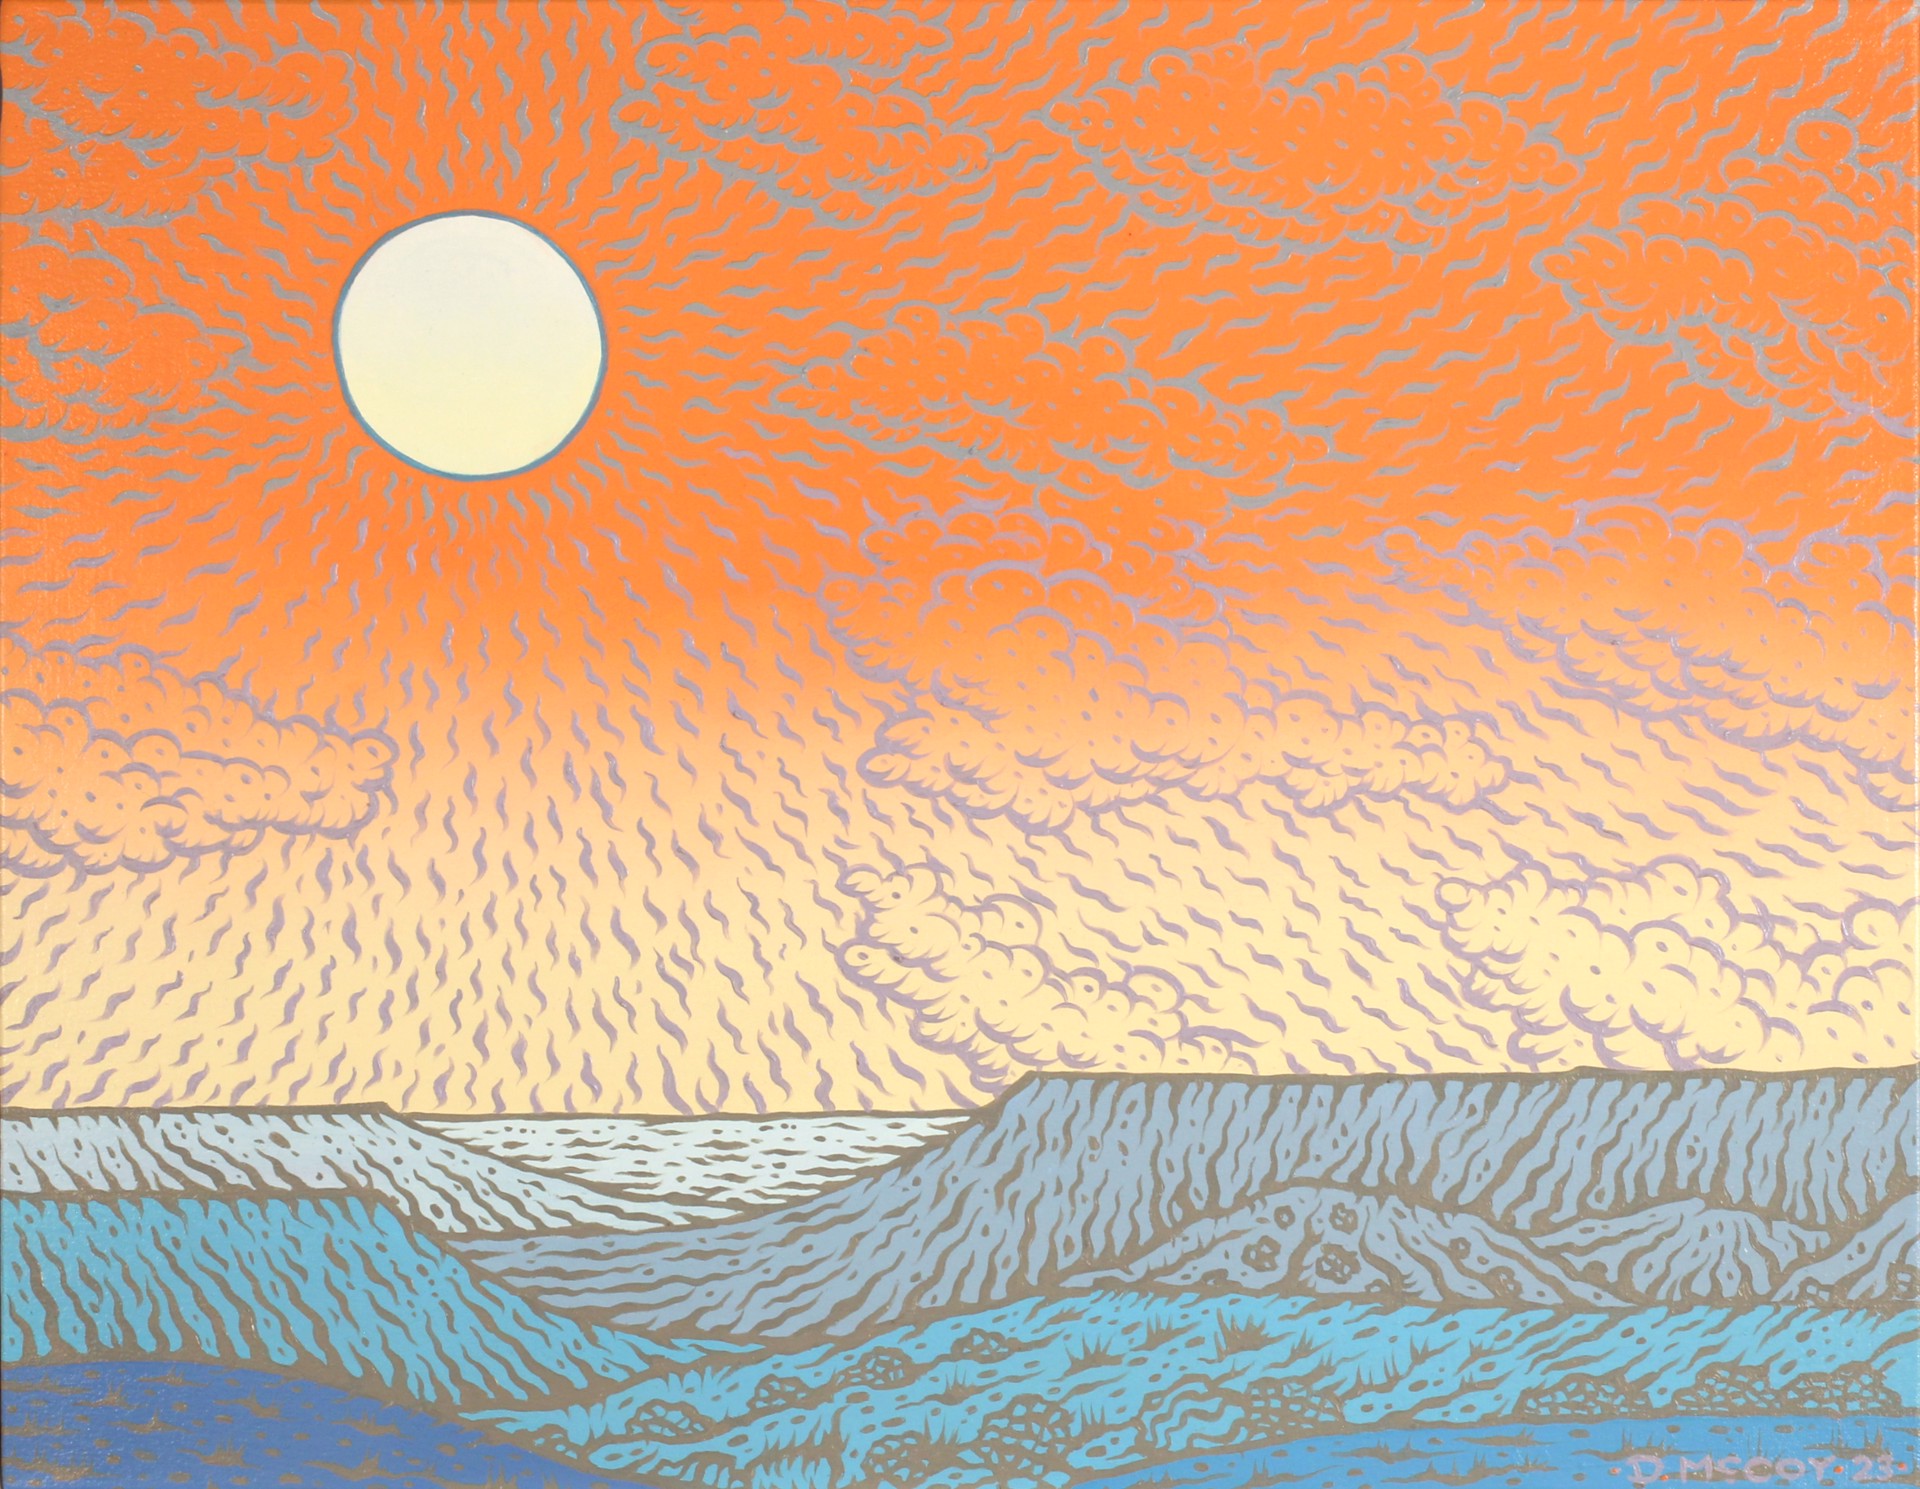 Dreamsicle Sunrise by Daniel McCoy